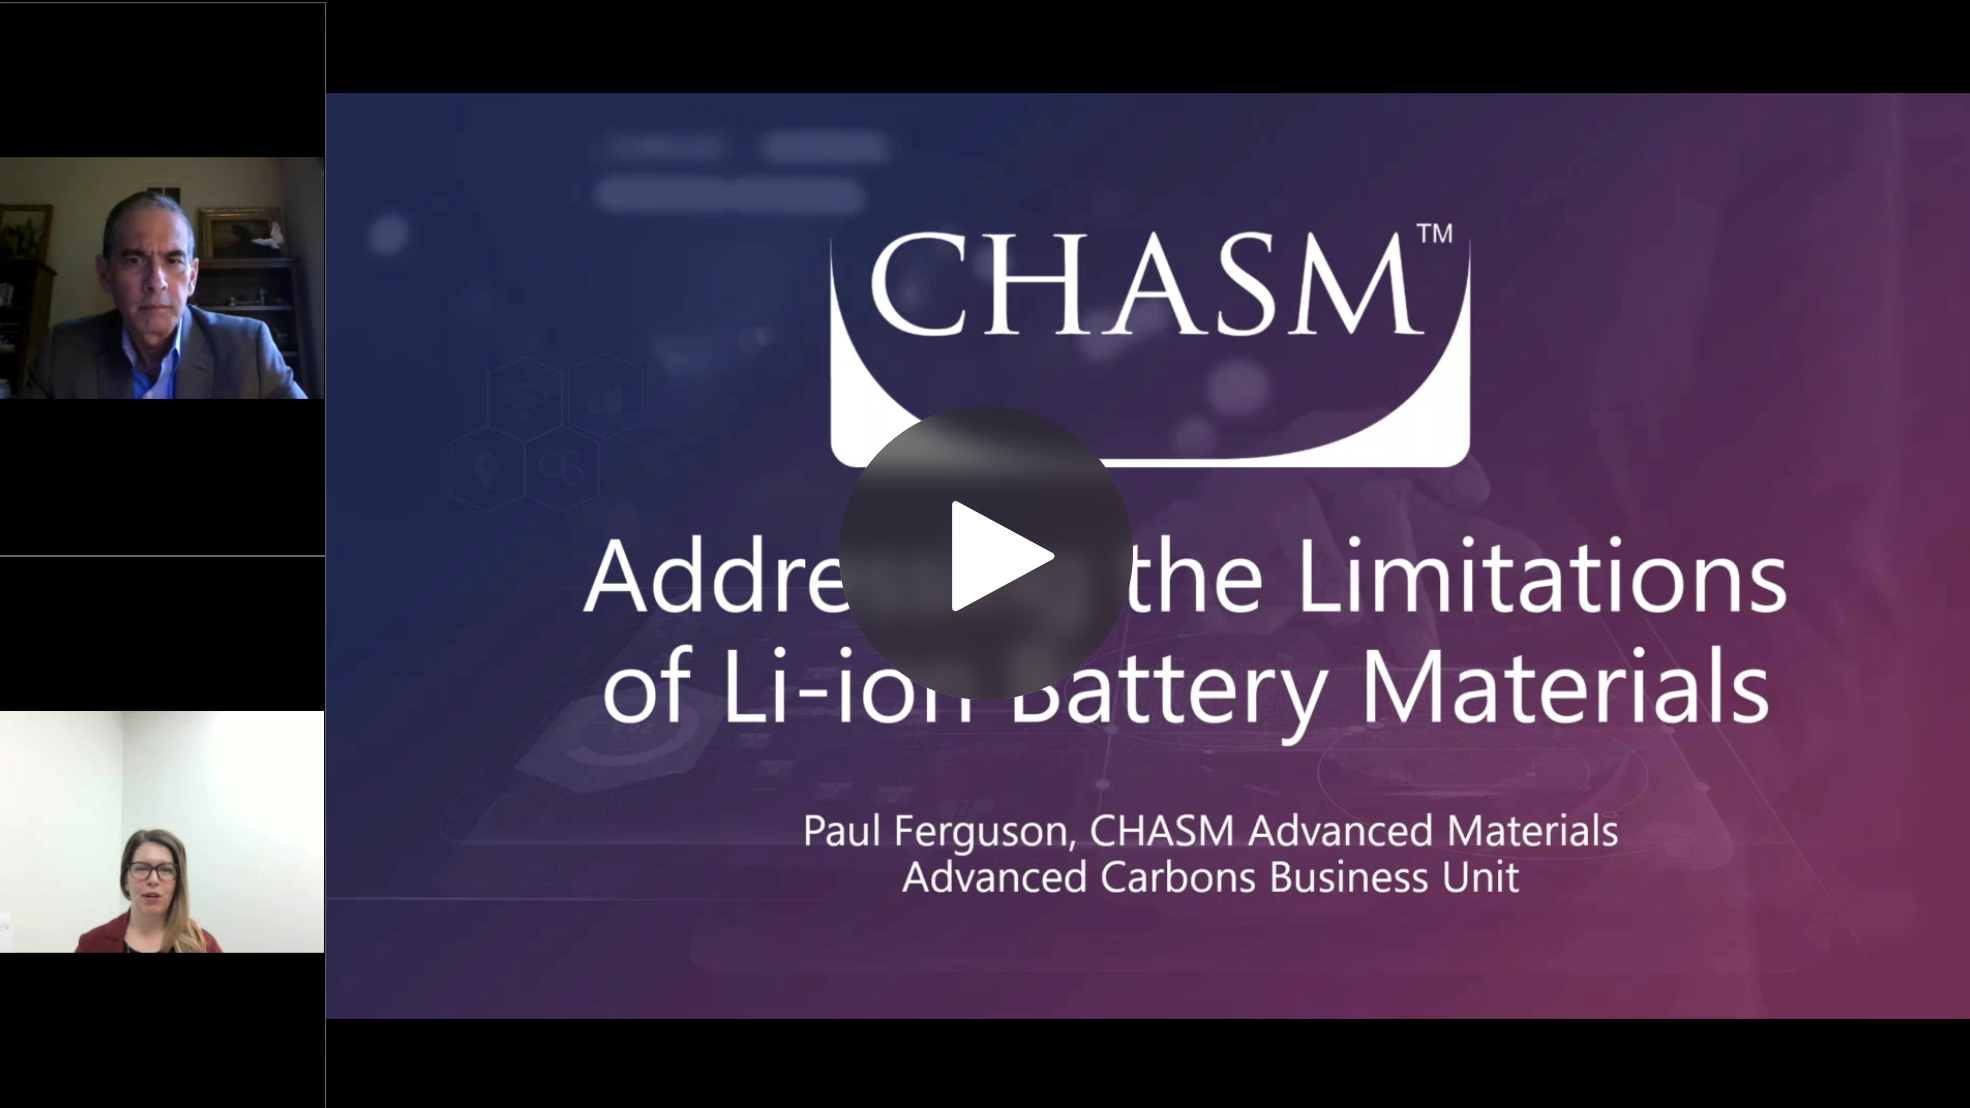 The Limitations of Li-ion Batteries